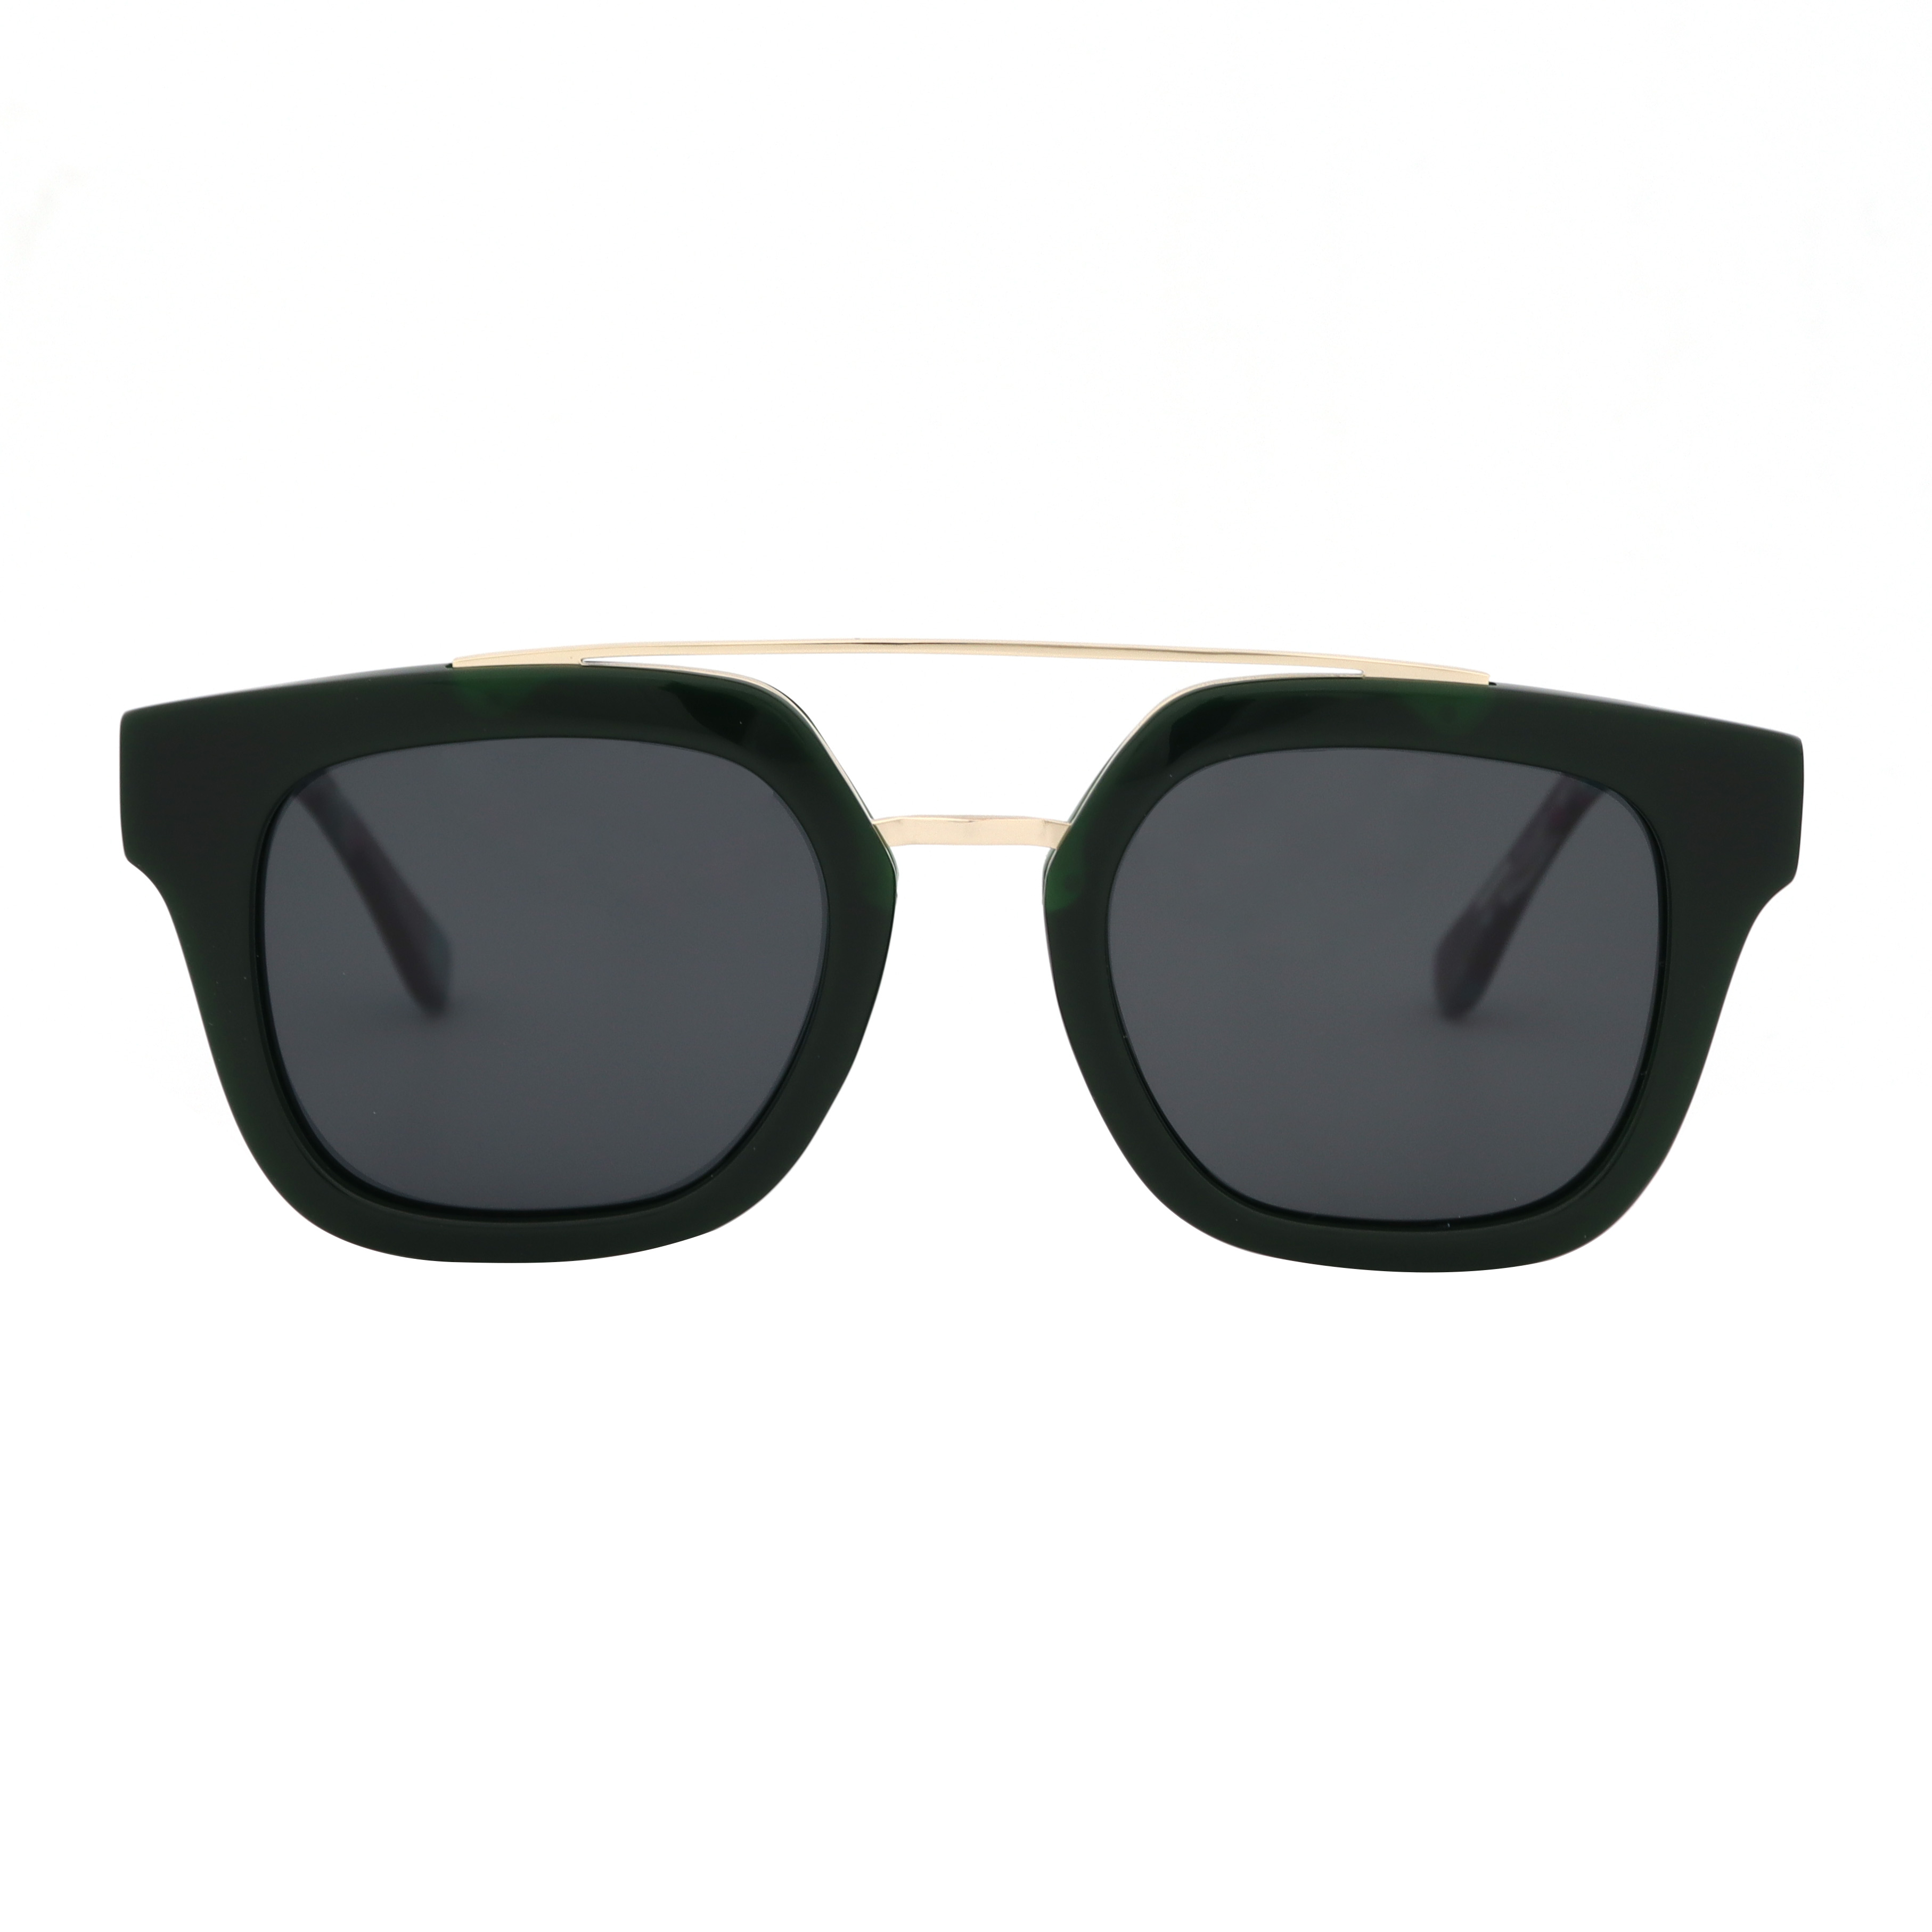 Boldly fashion double bridge acetate sunglasses Featured Image